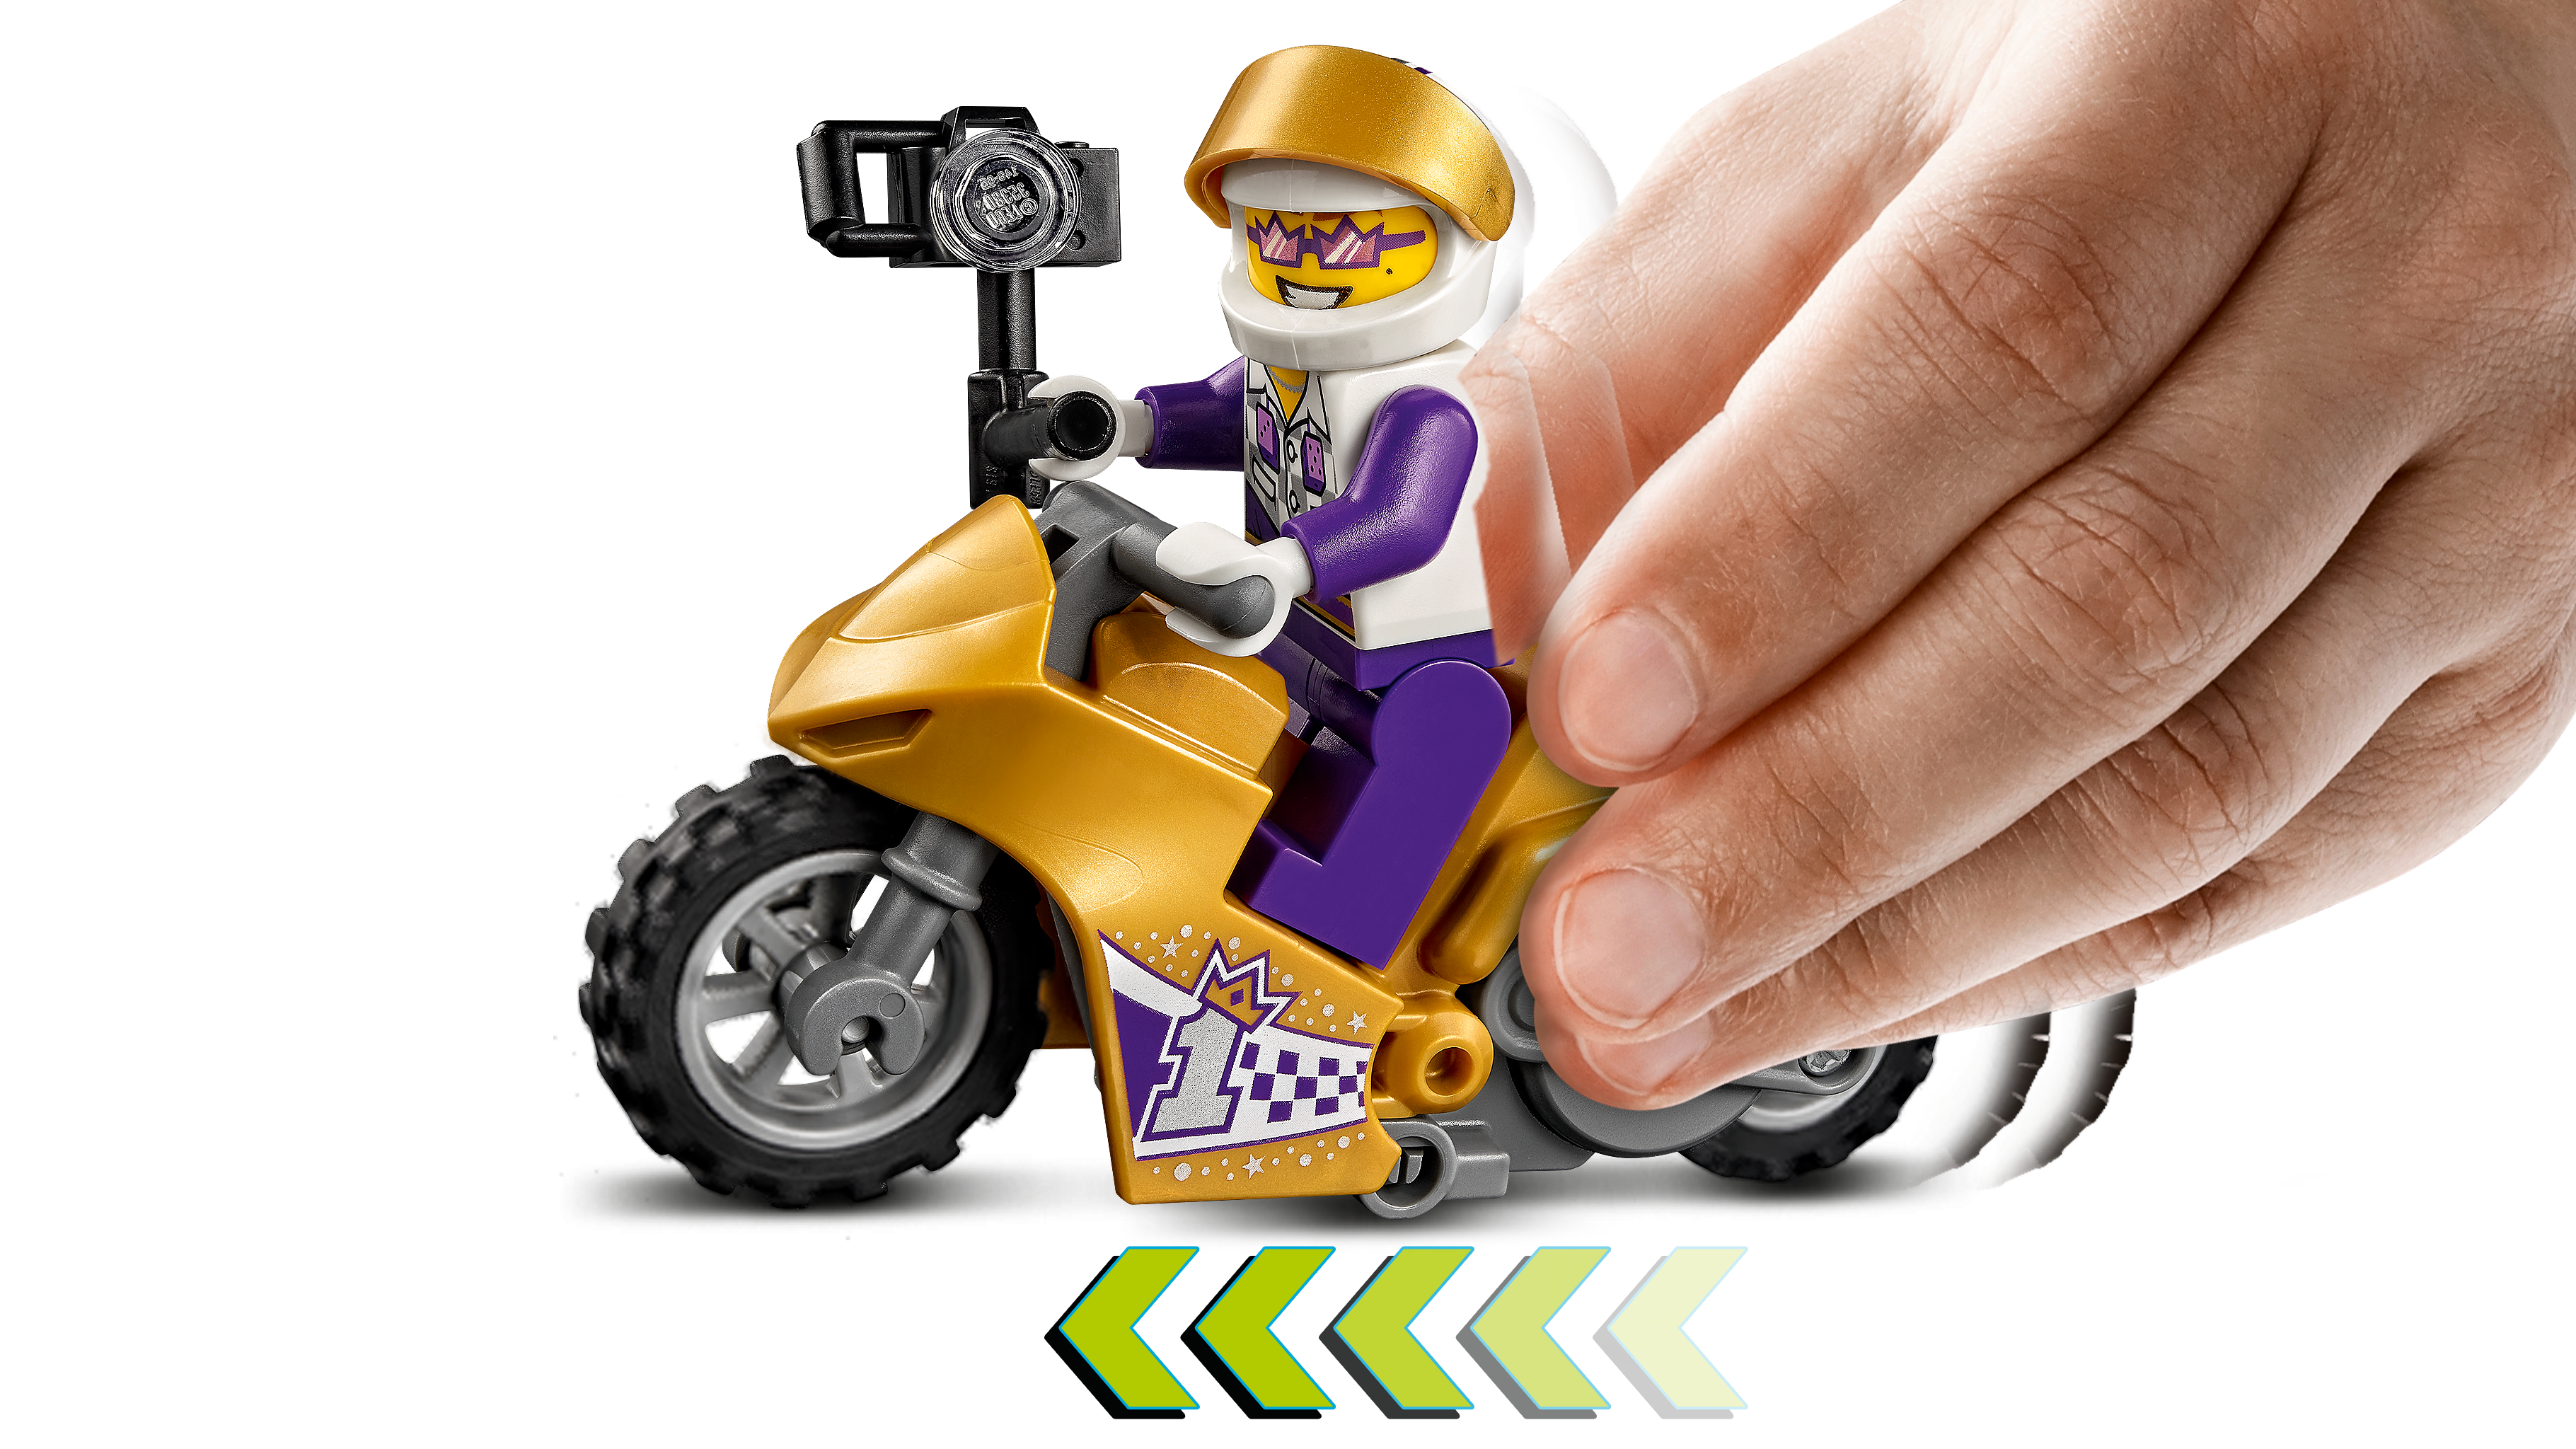 Lego 60309 Selfie Stunt Bike